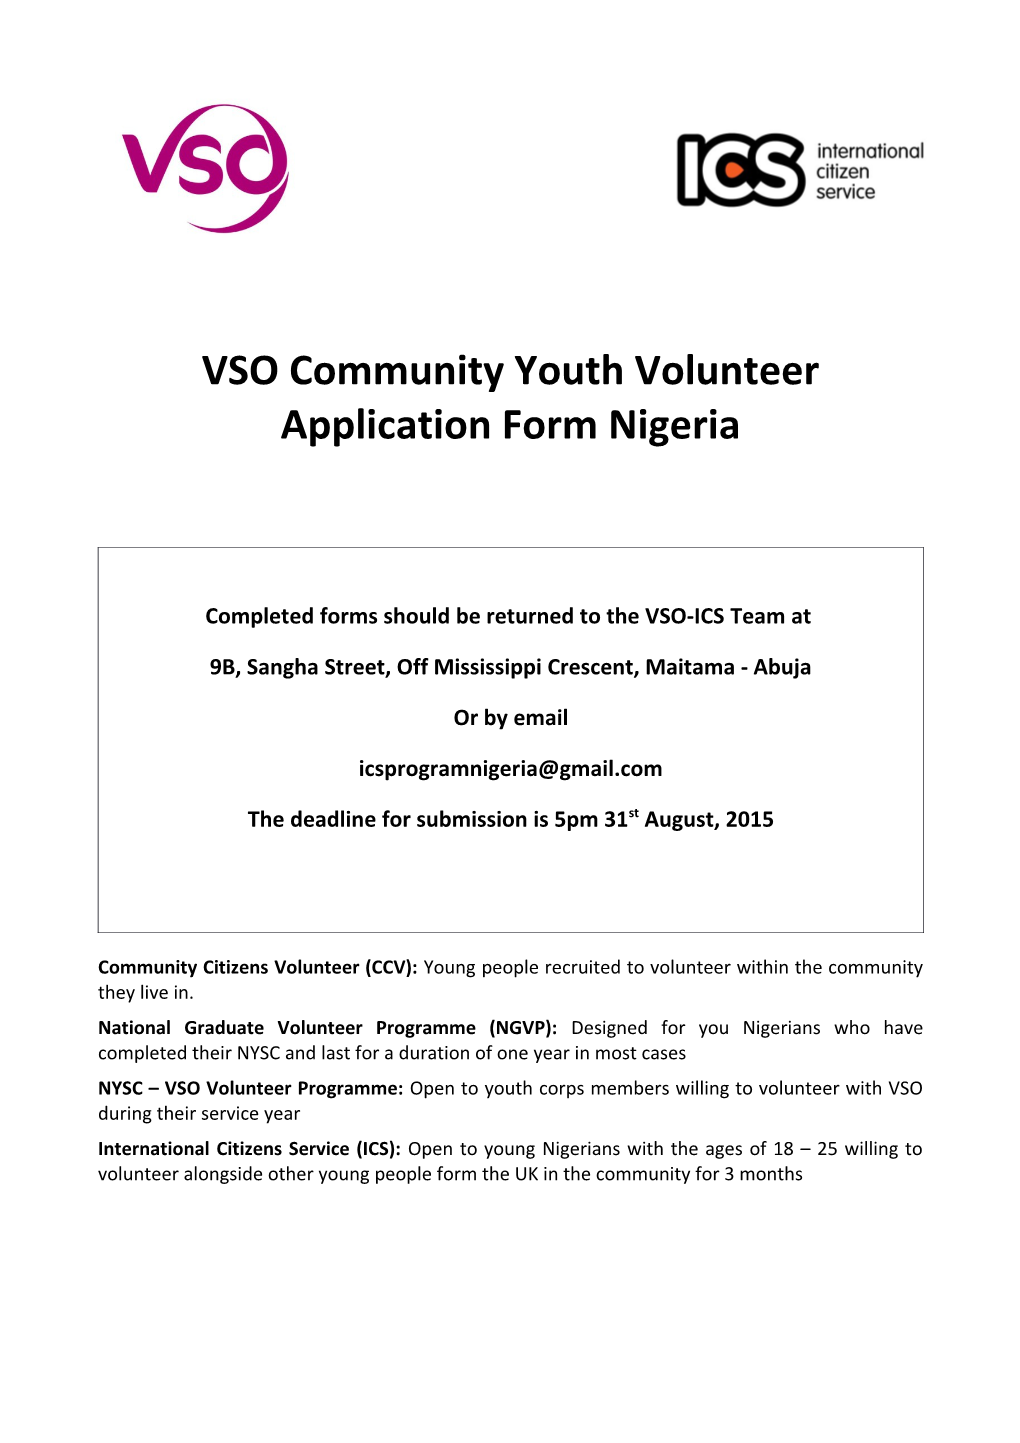 VSO Community Youth Volunteer Application Form Nigeria